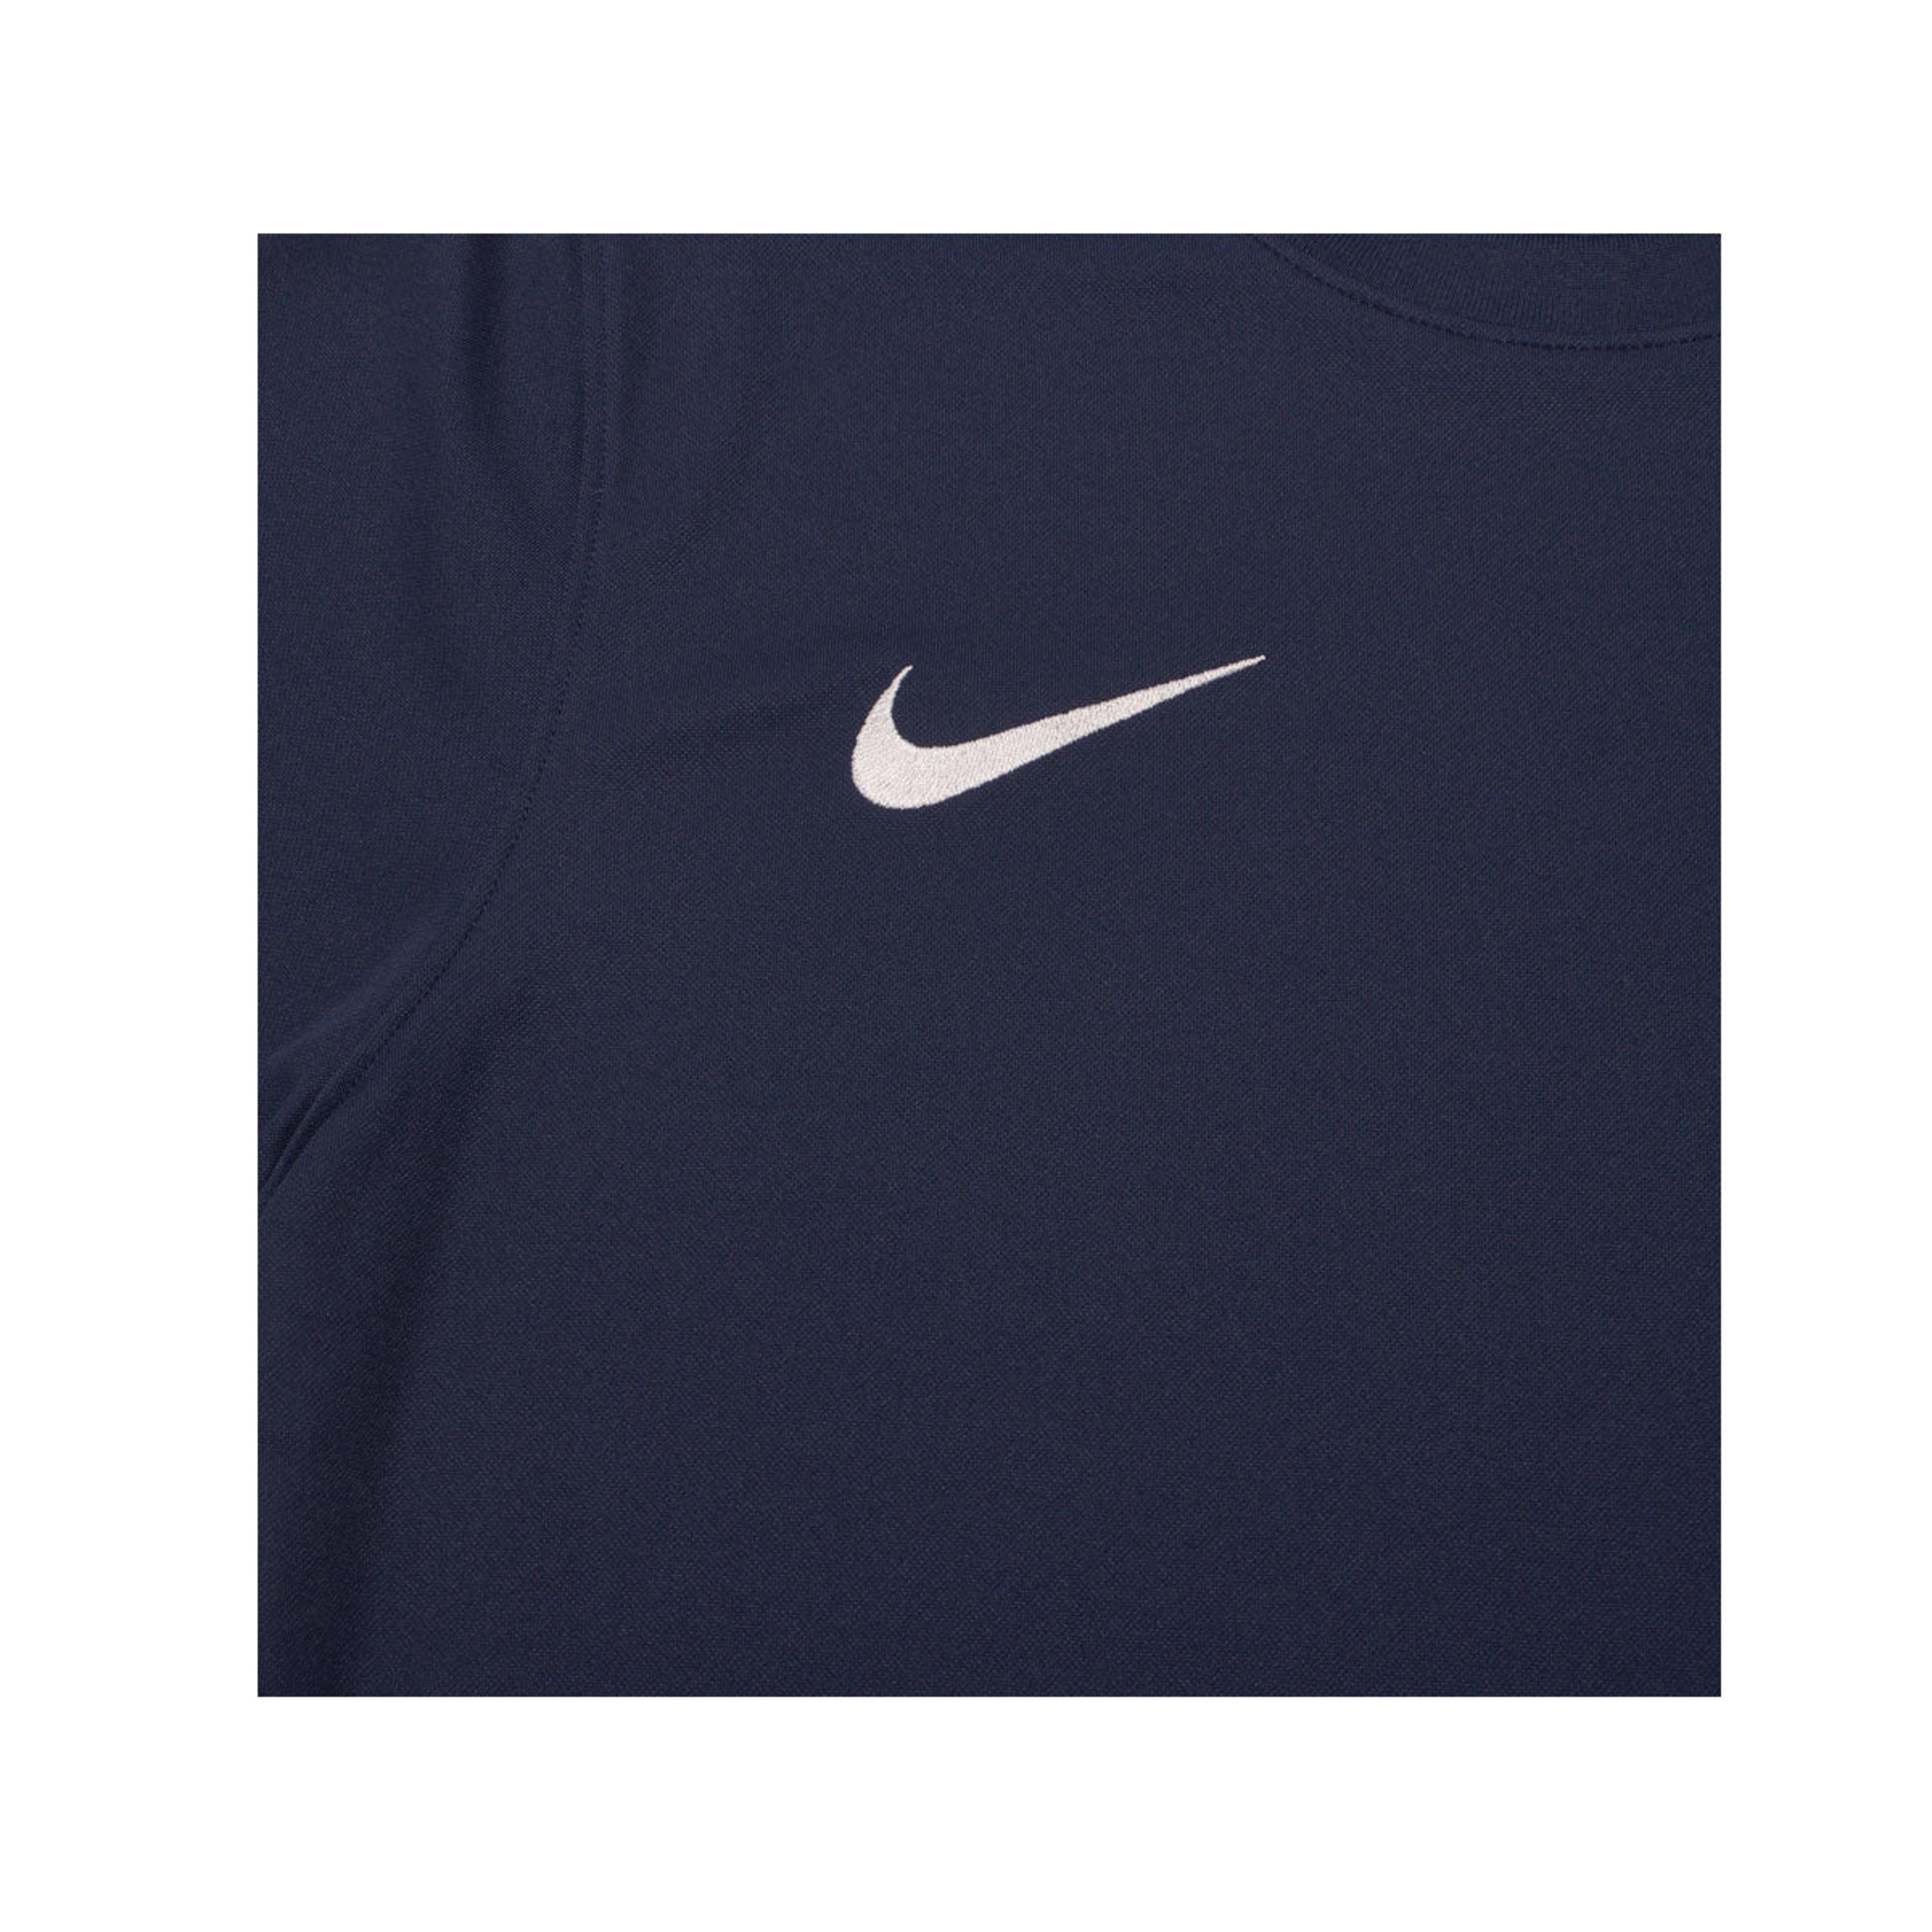 Alternate View 2 of Nike Men's DRI-FIT T-Shirt Park VII